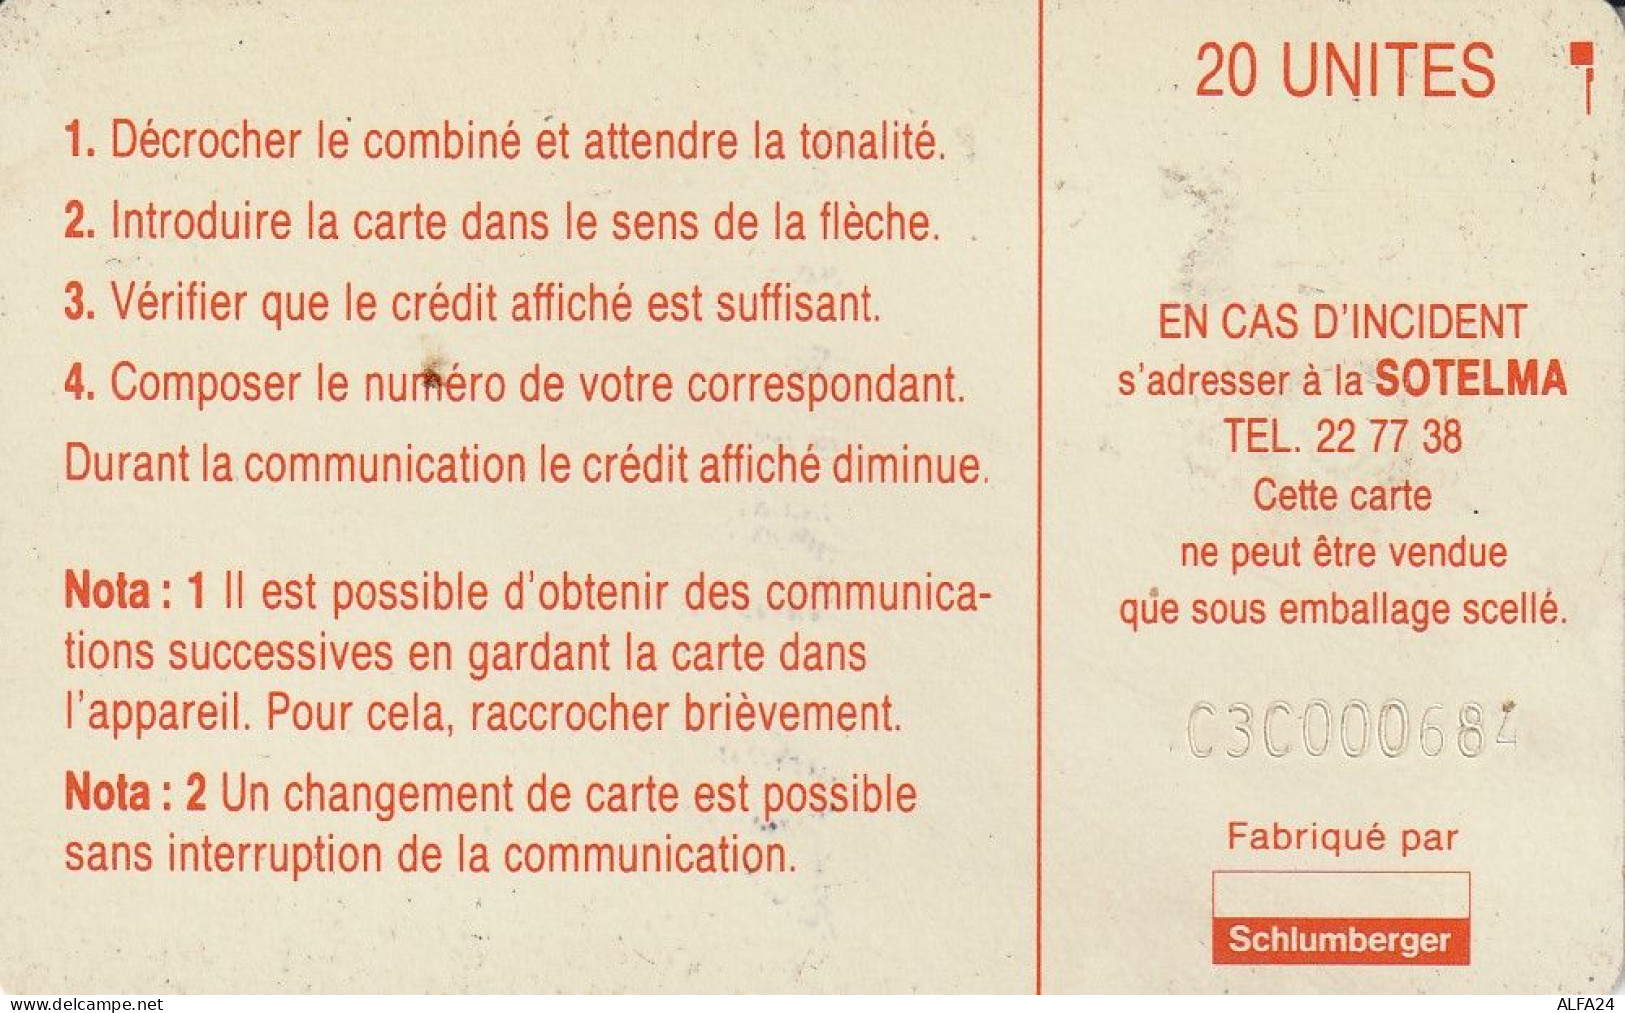 PHONE CARD MALI  (E35.7.8 - Mali